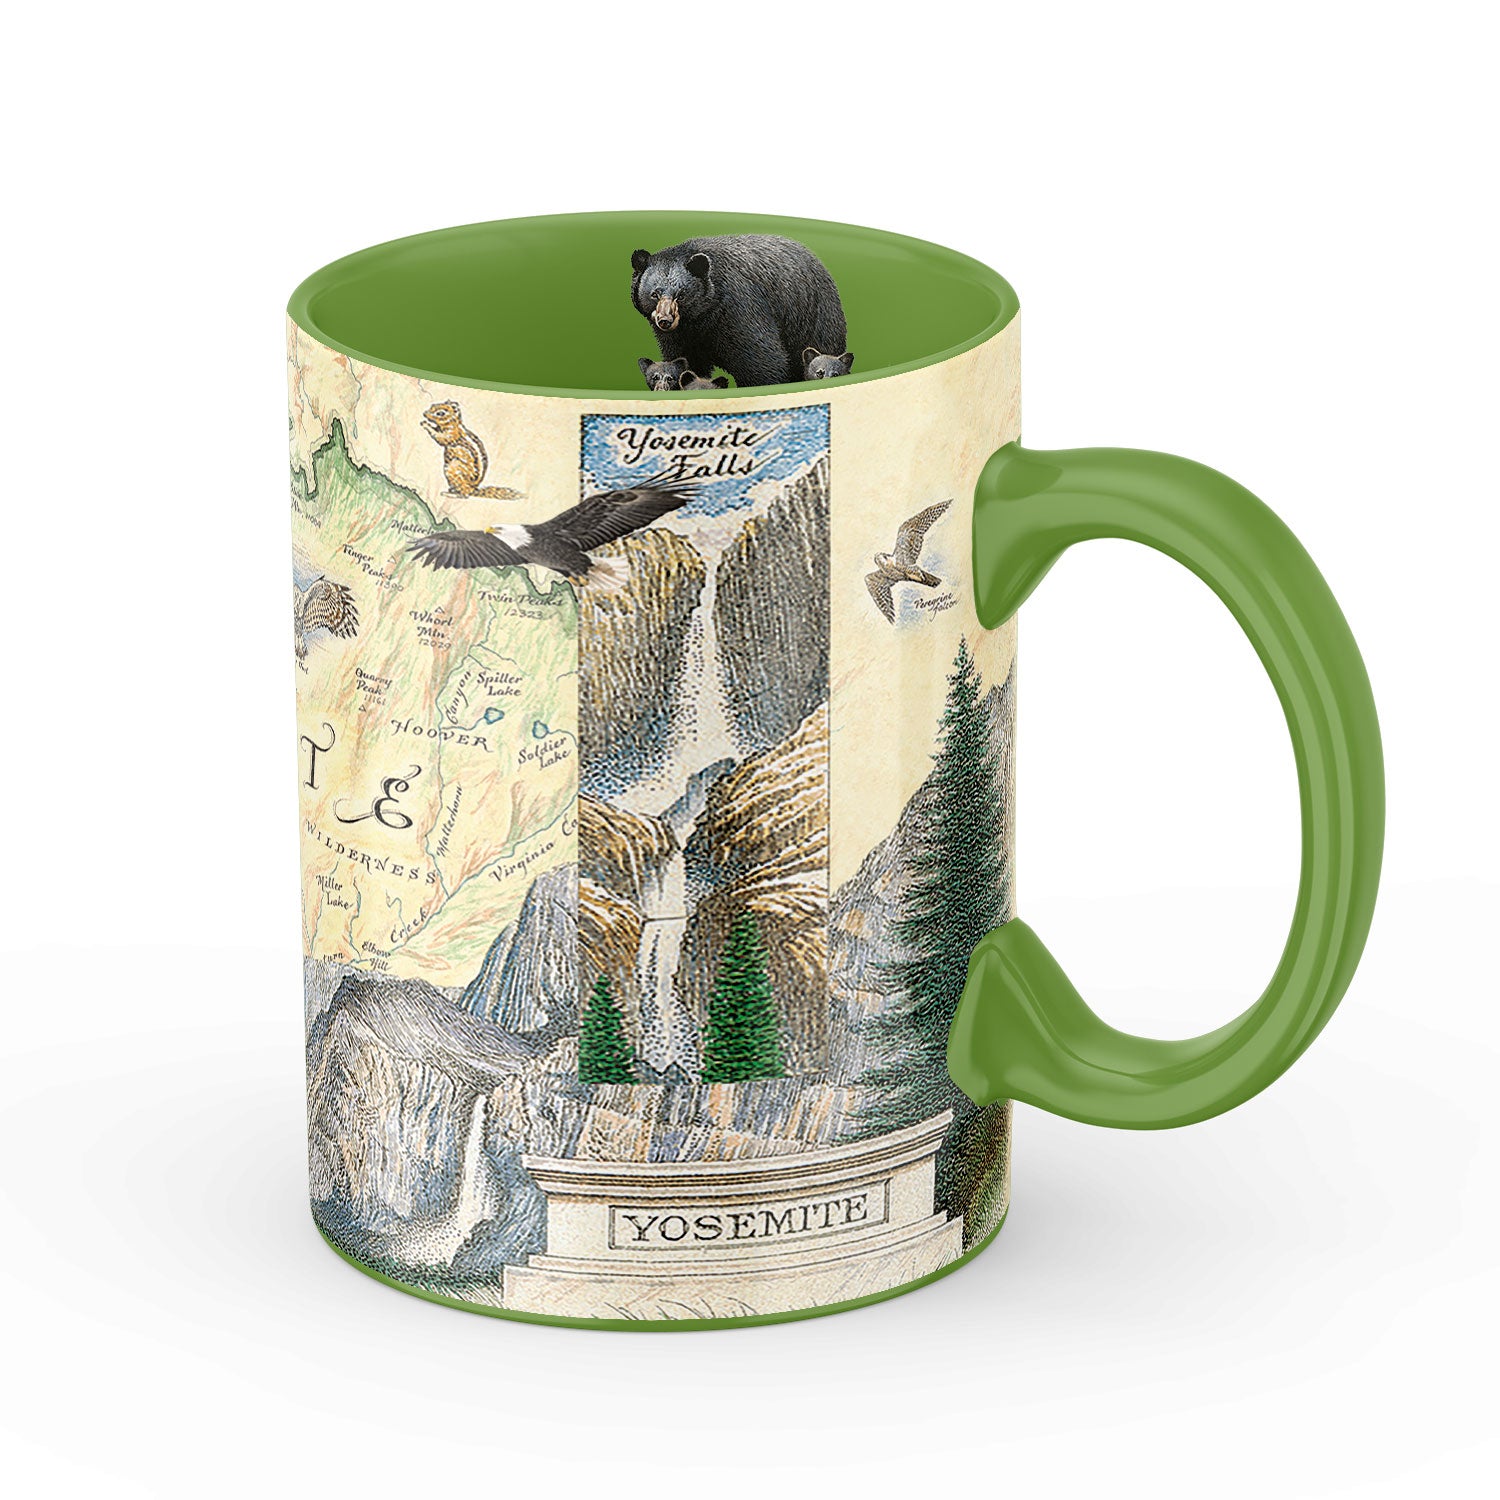 Shop National Park Iconic Enamel Mug Inspired By National Parks